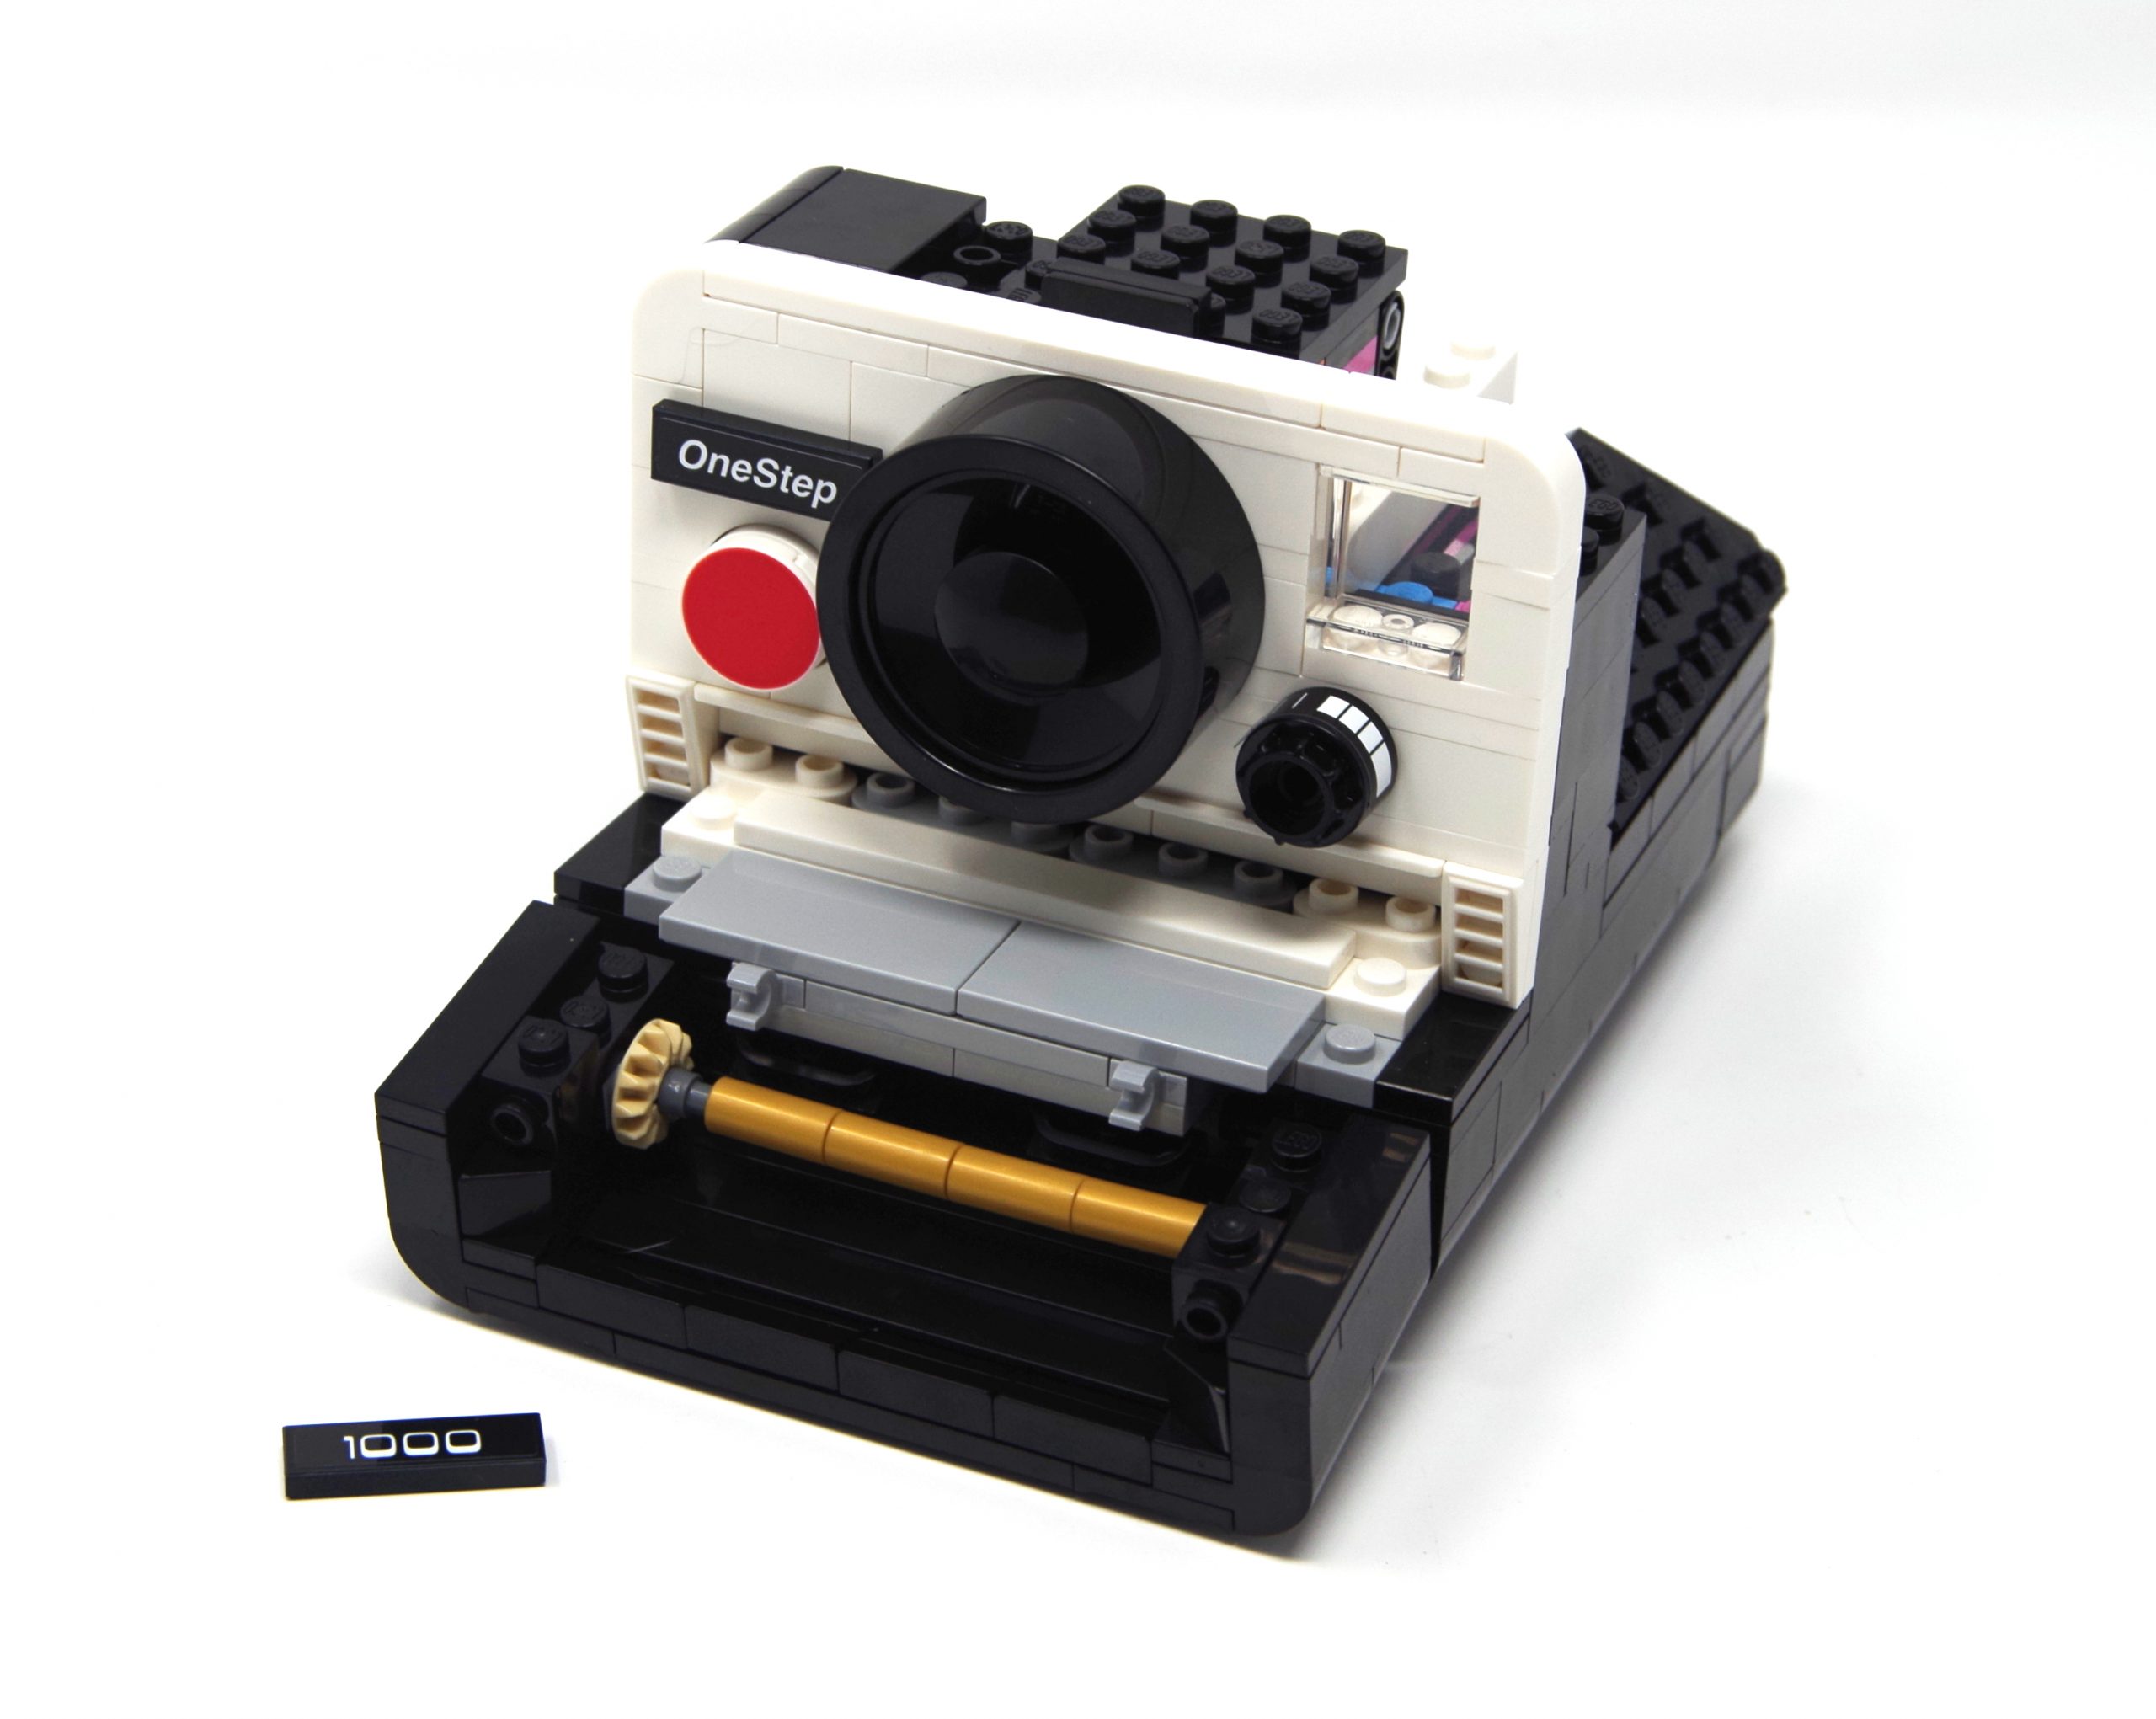 LEGO Polaroid Camera Review 